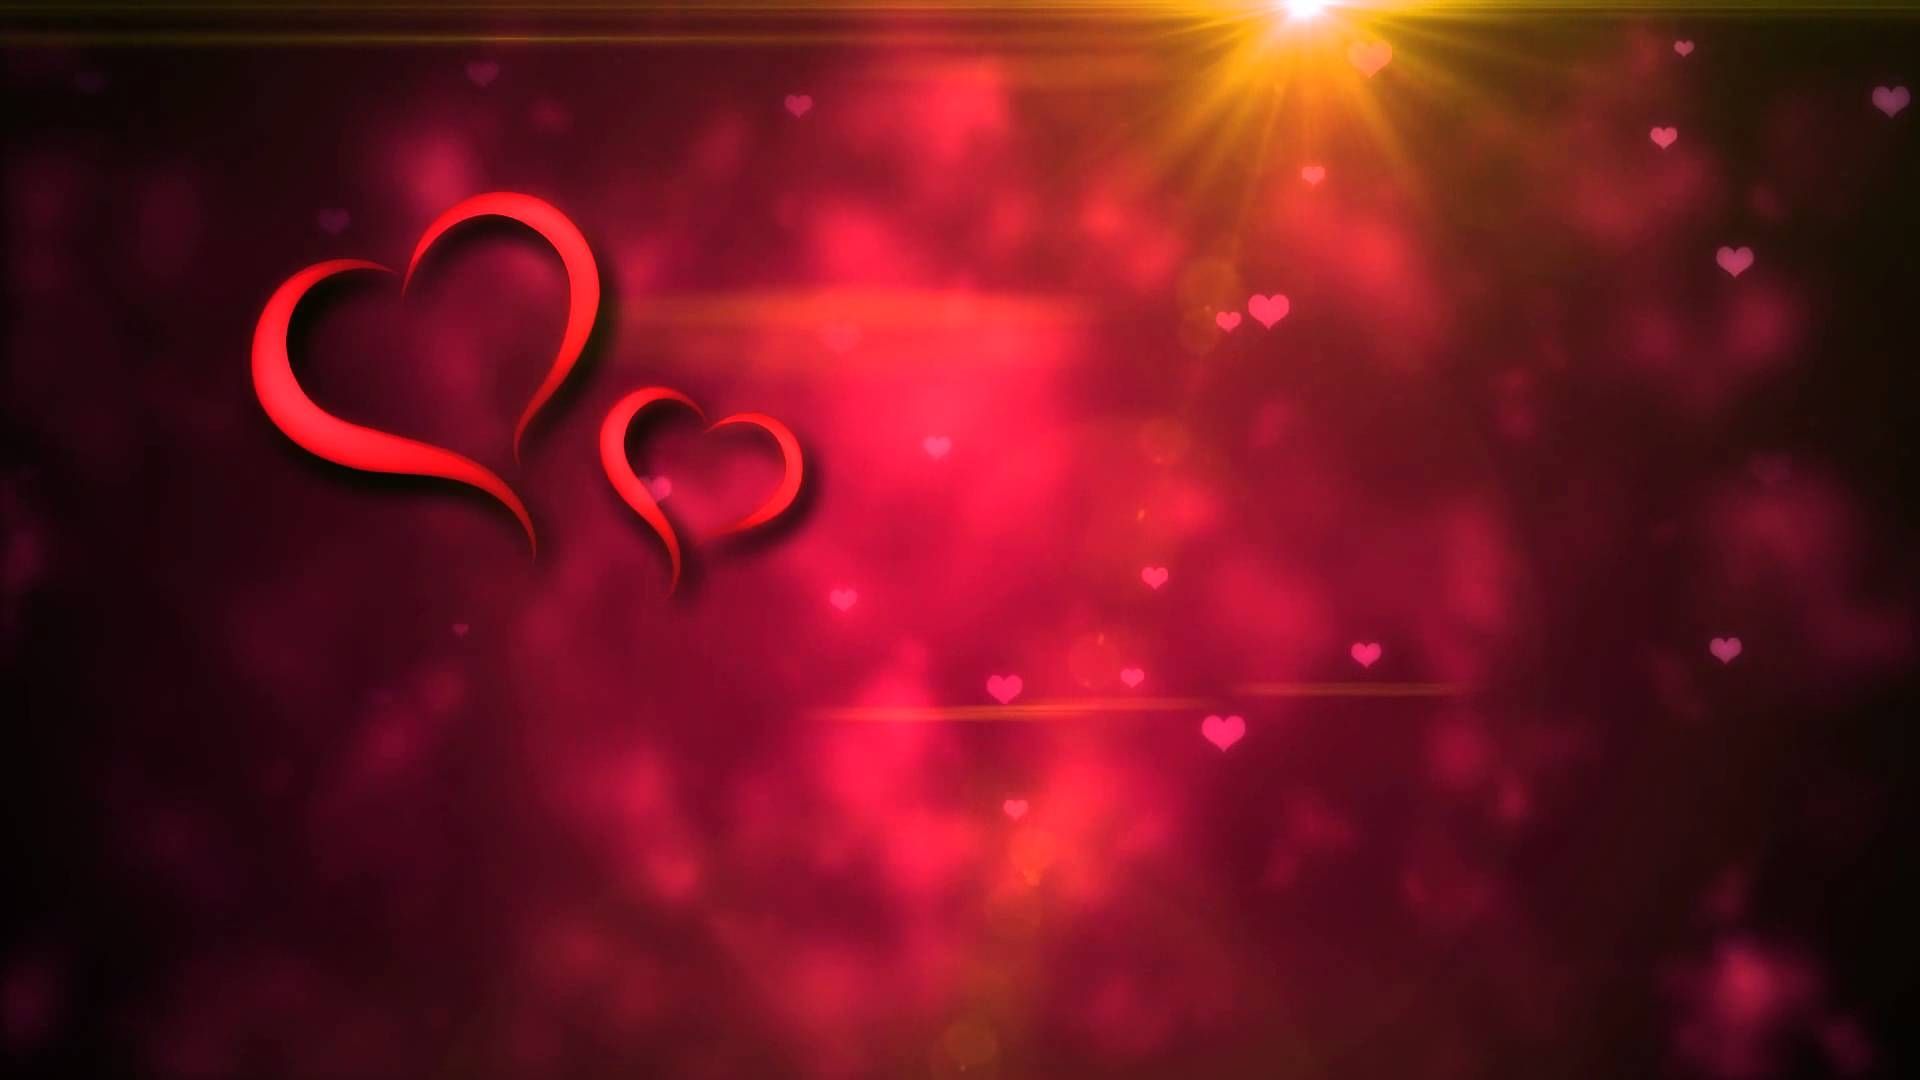 love wallpaper hd 1080p free download,red,heart,pink,love,organ